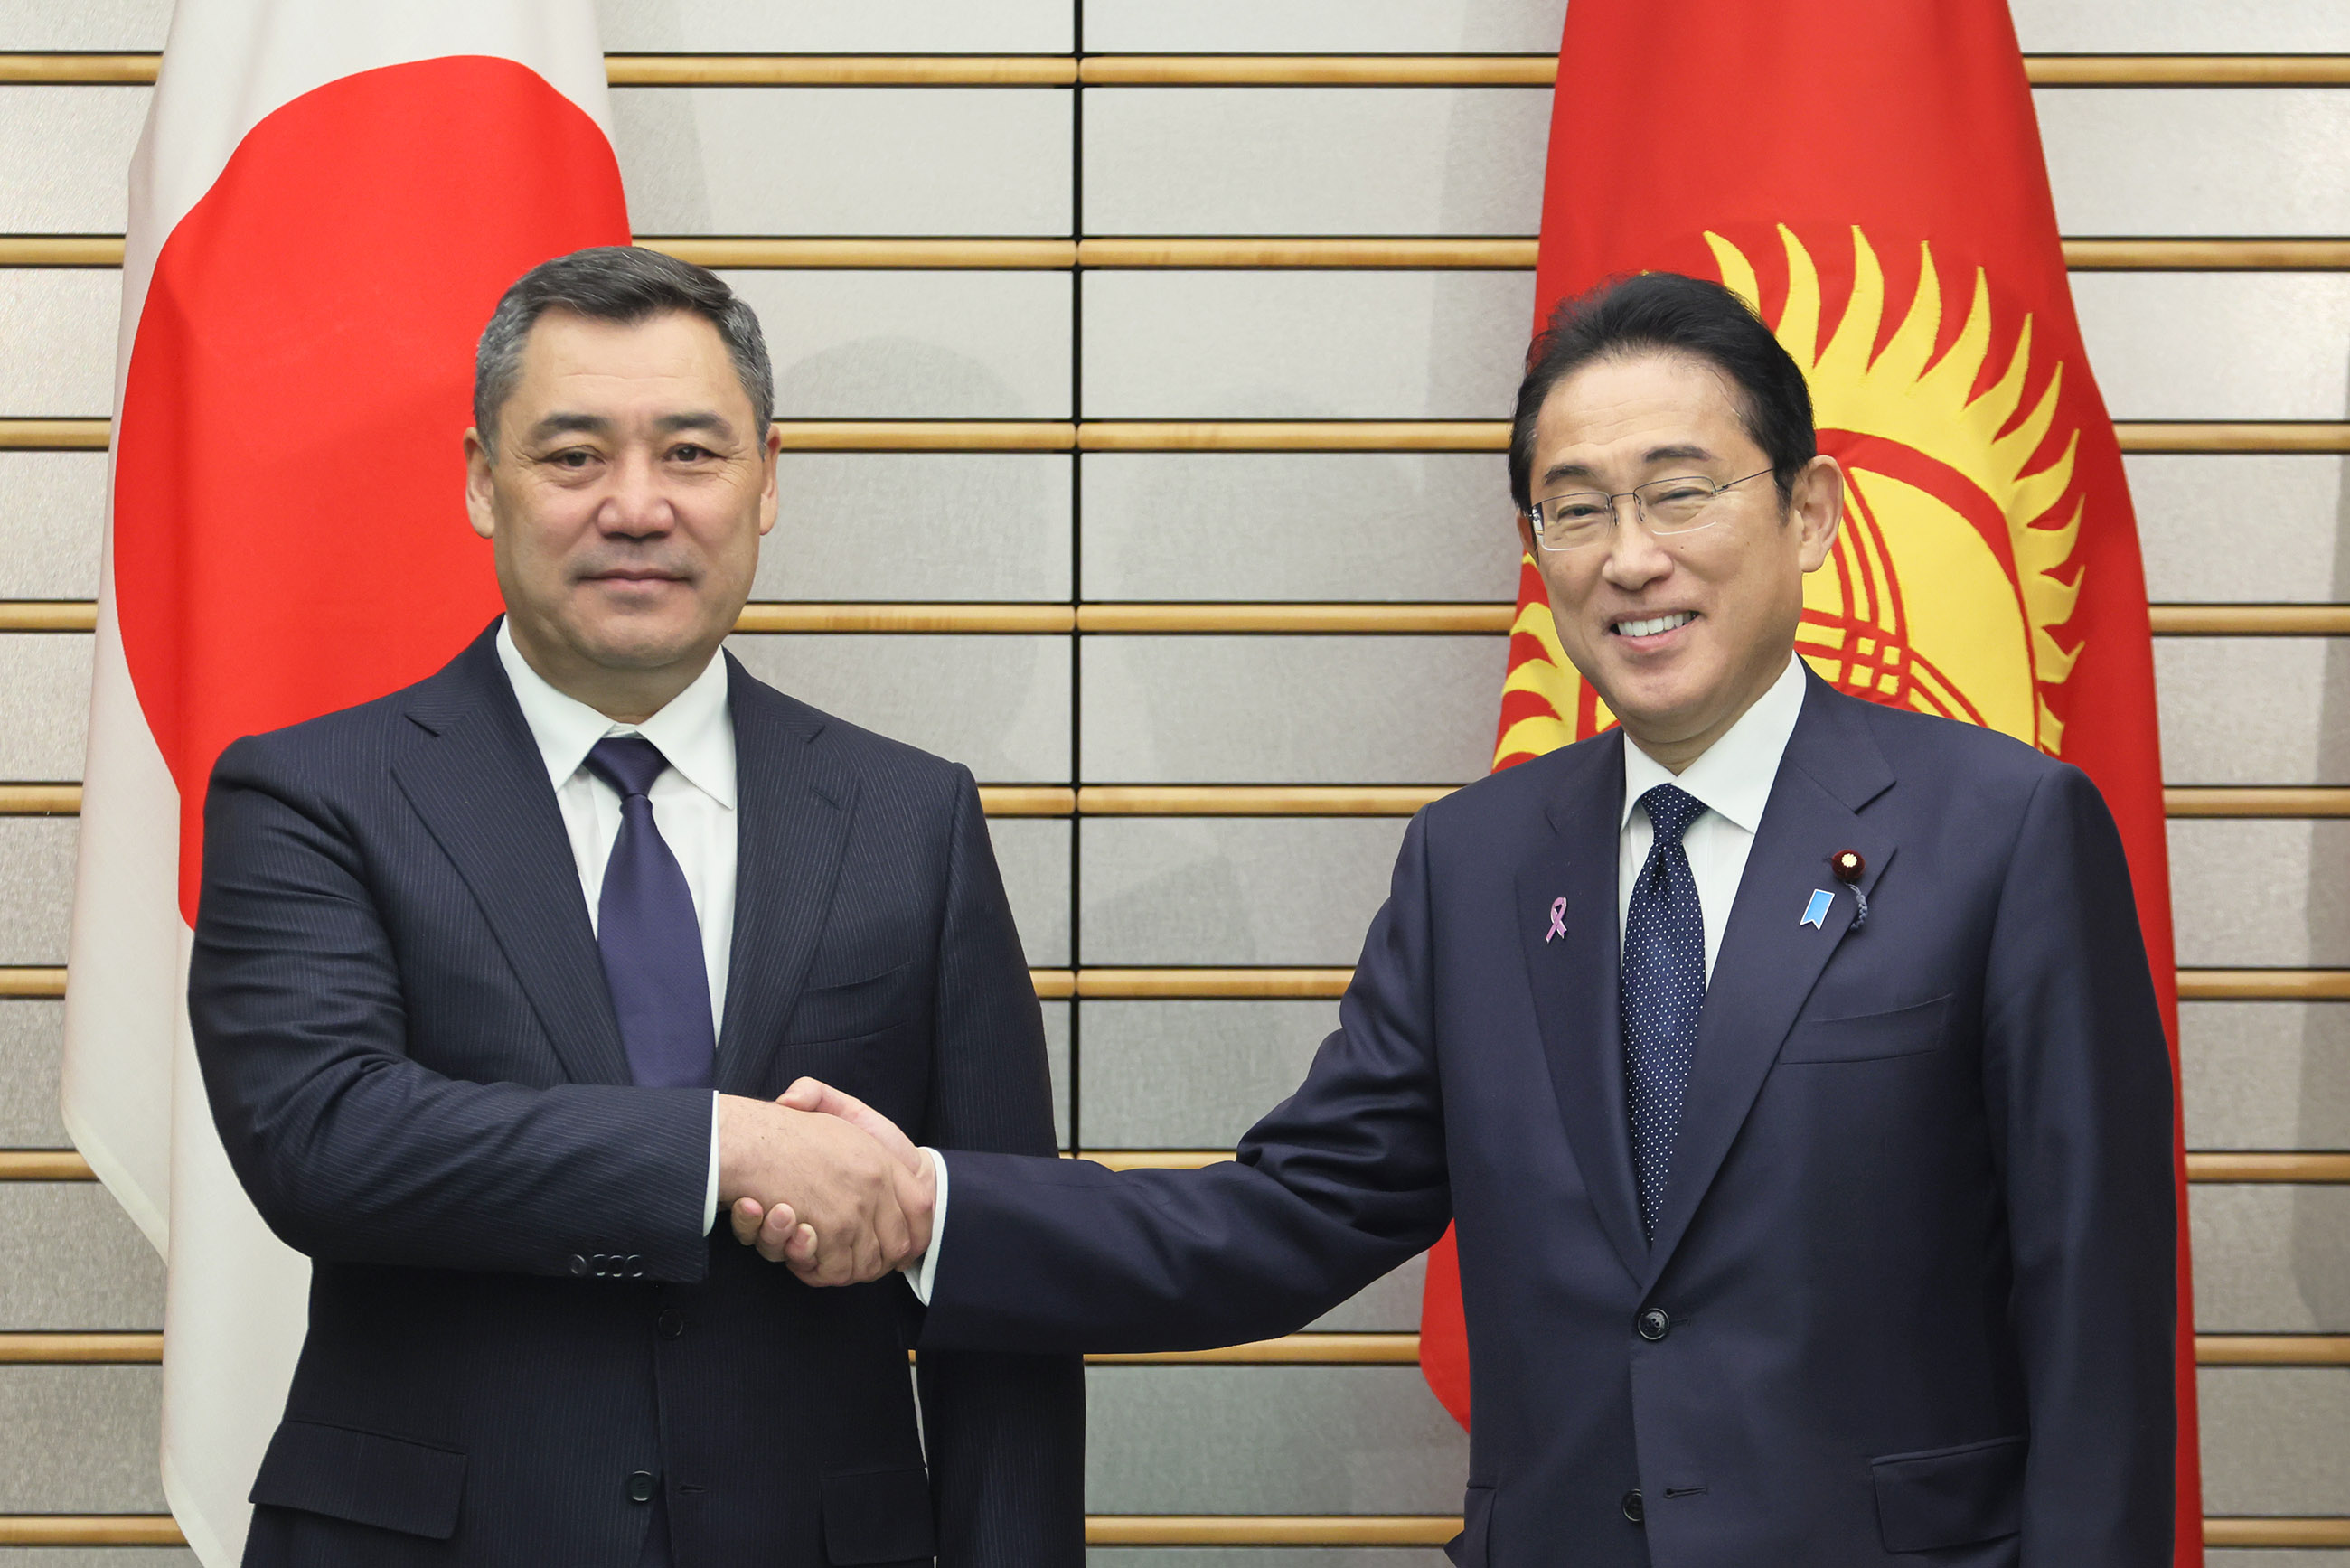 Japan-Kyrgyz Summit Meeting